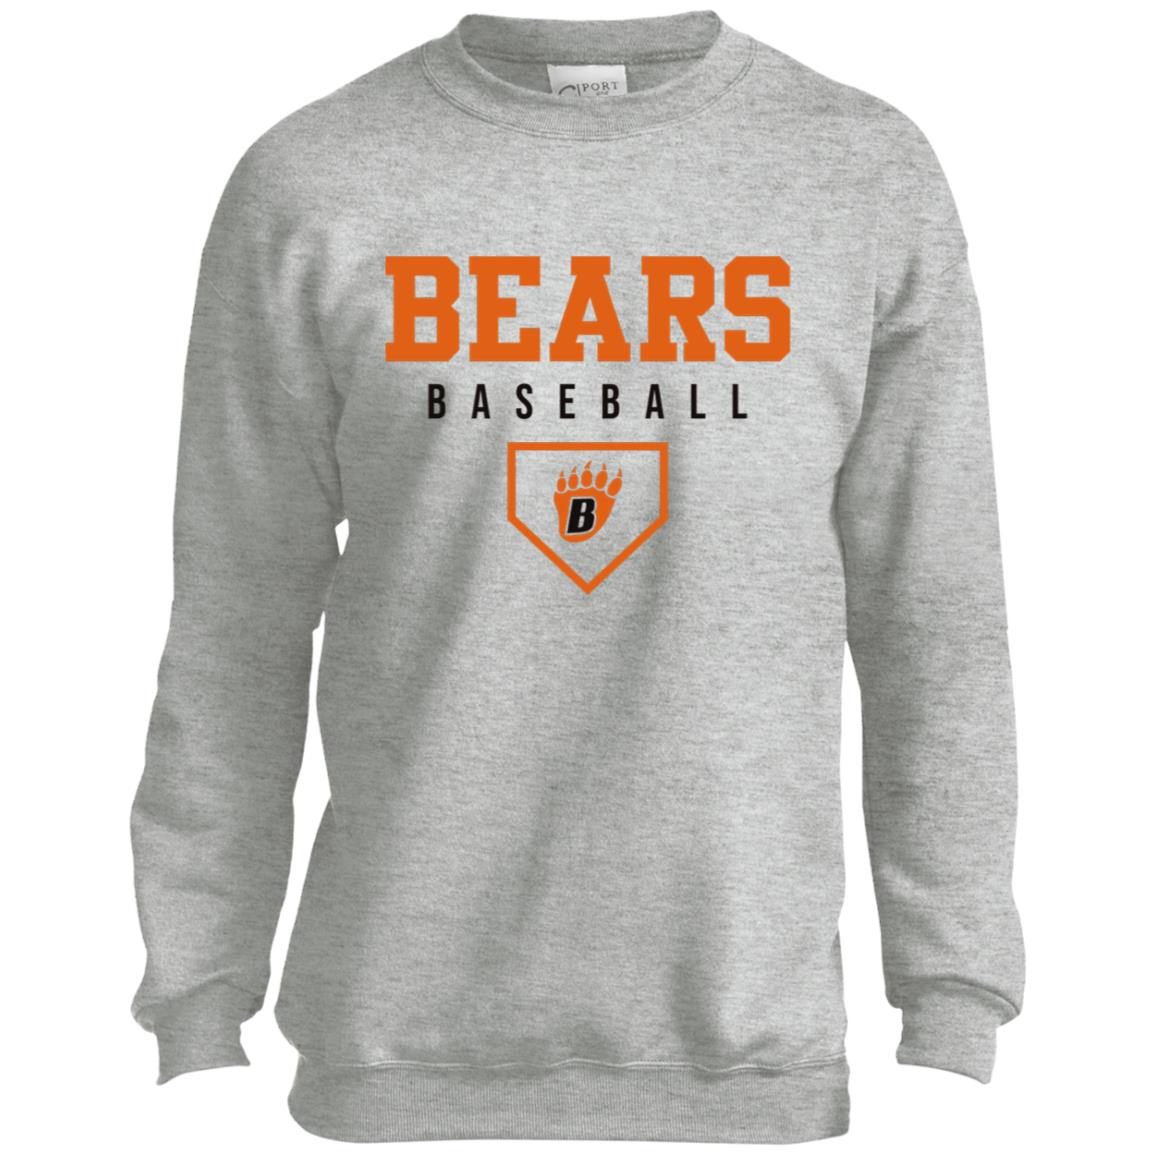 WBLHSB Bears Baseball Youth Crewneck Sweatshirt